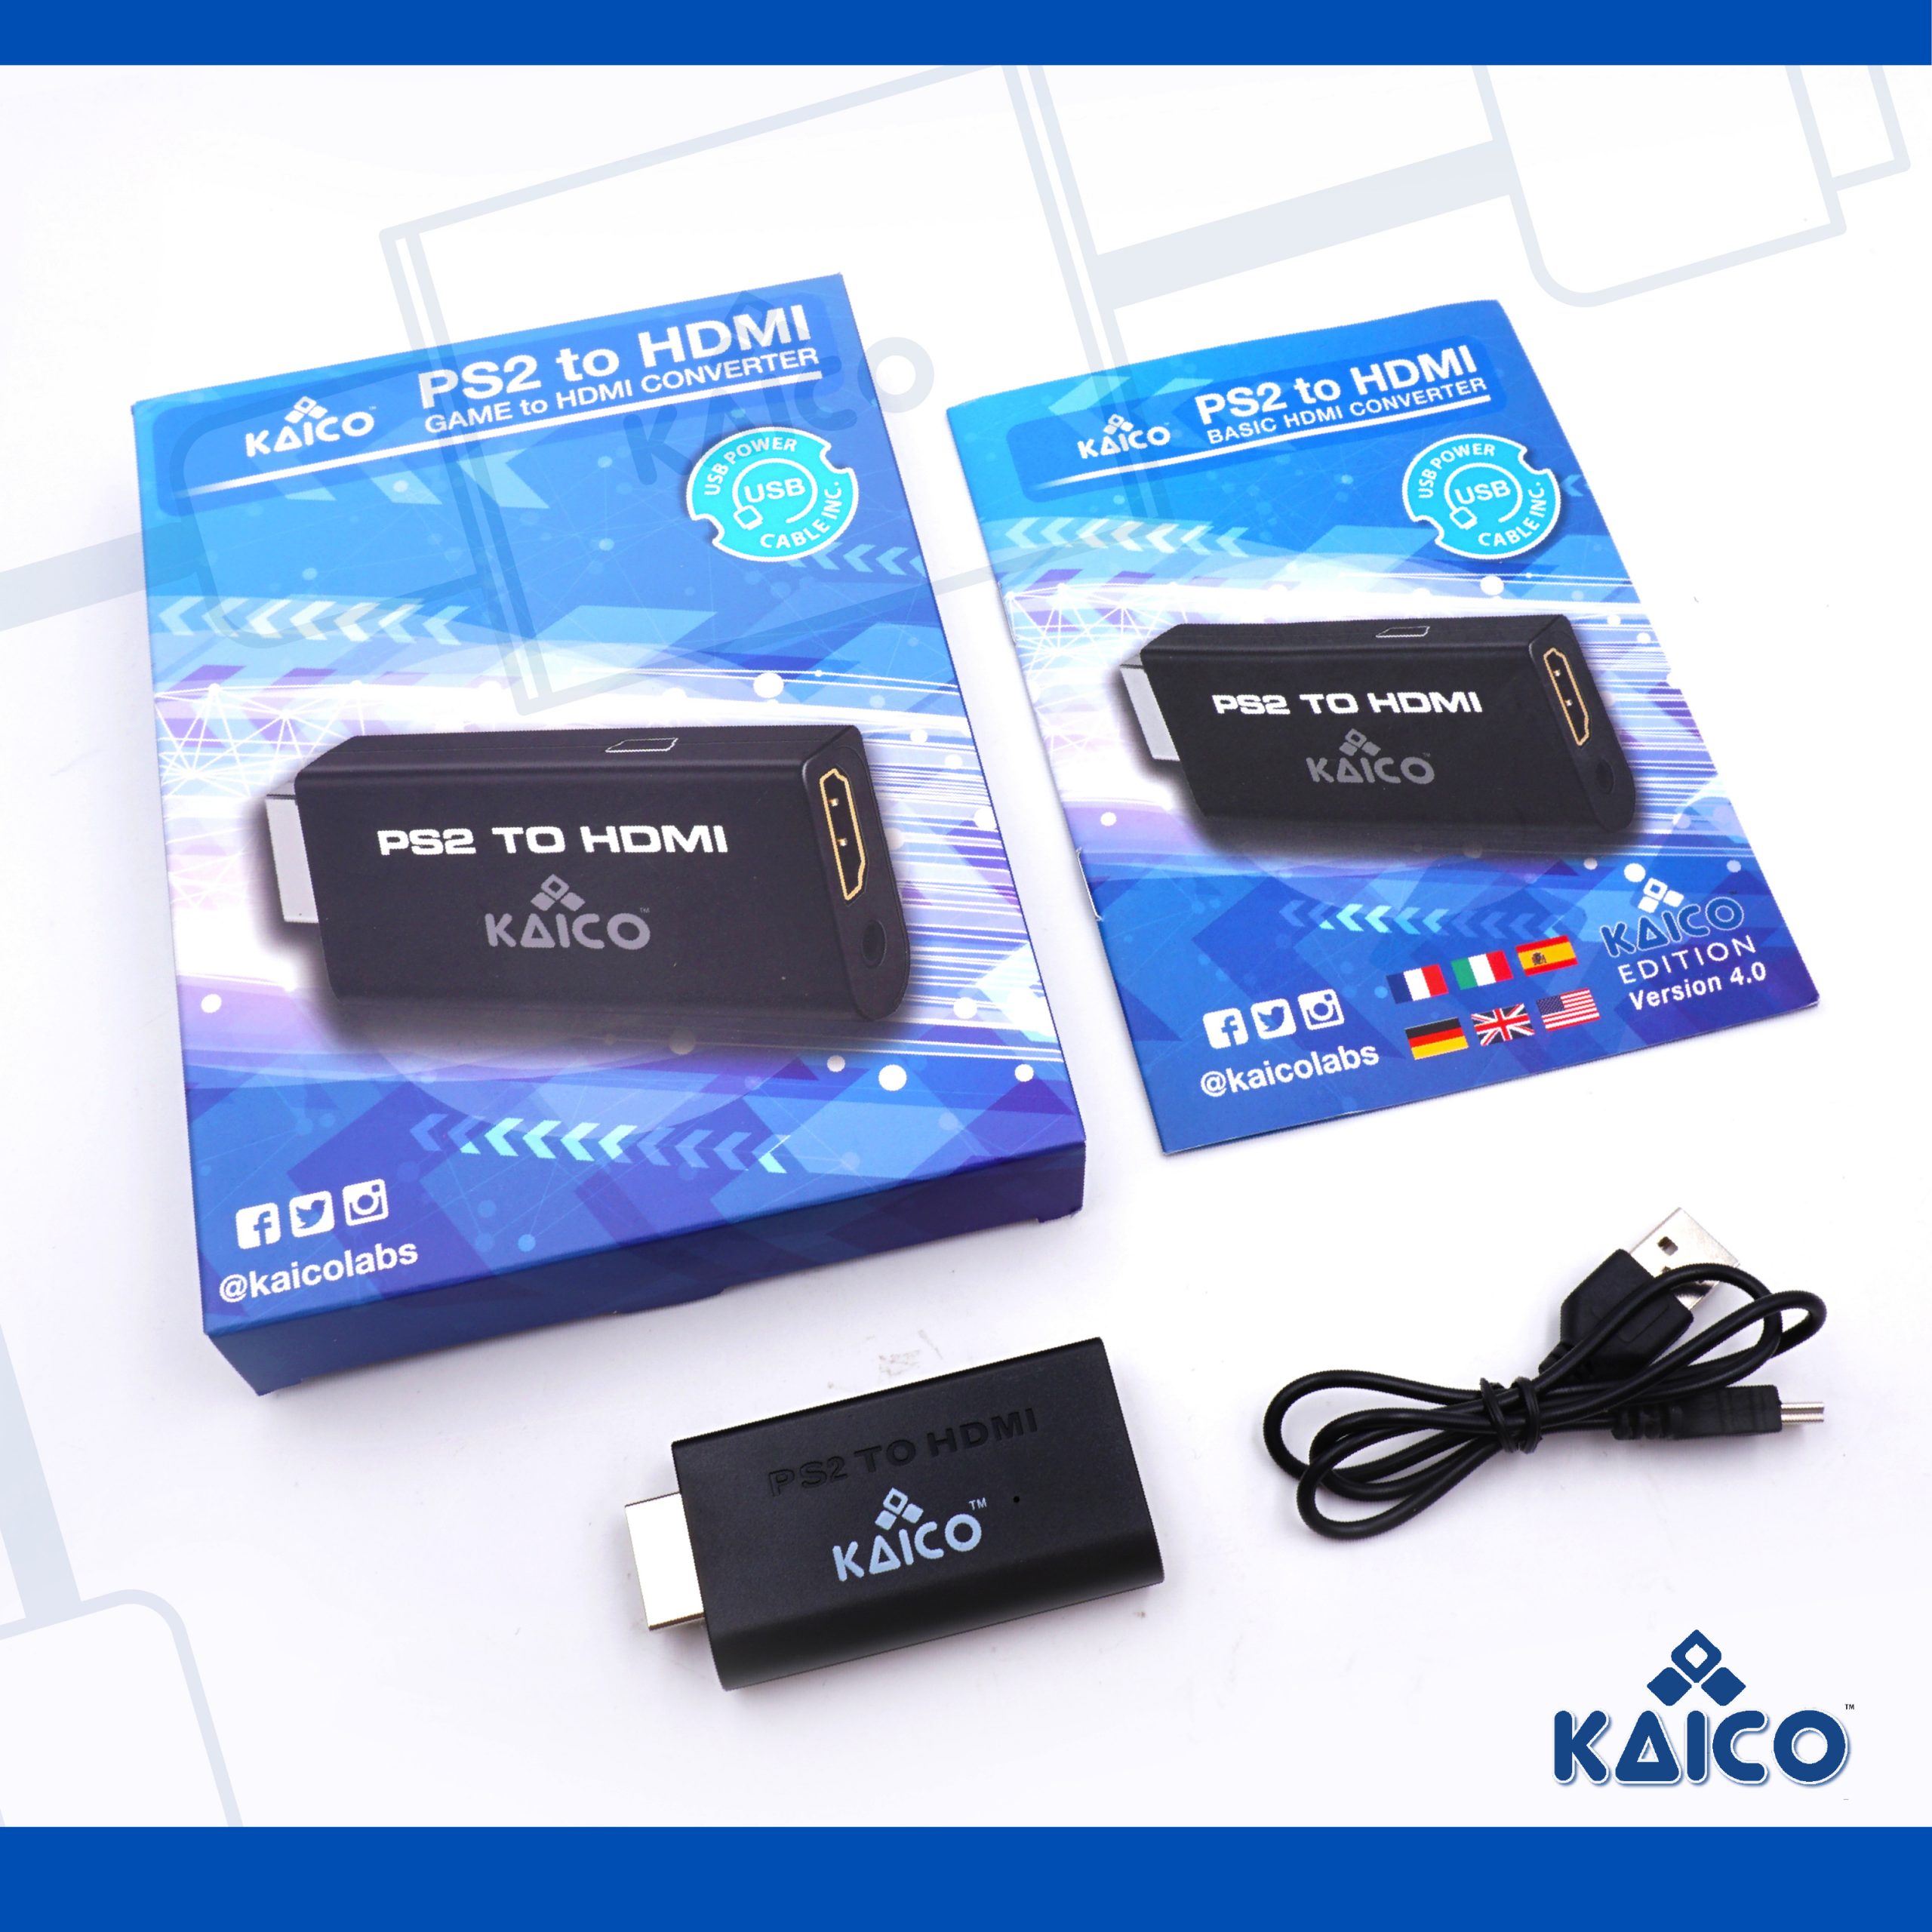  Kaico Edition - Playstation 2 PS2 HDMI Converter - PS2 to HDMI  - Component to HDMI Converter Adaptor - Play Playstation 2 on Your HDMI TV  - Retro Gaming PS2 HDMI Converter Adapter : Video Games